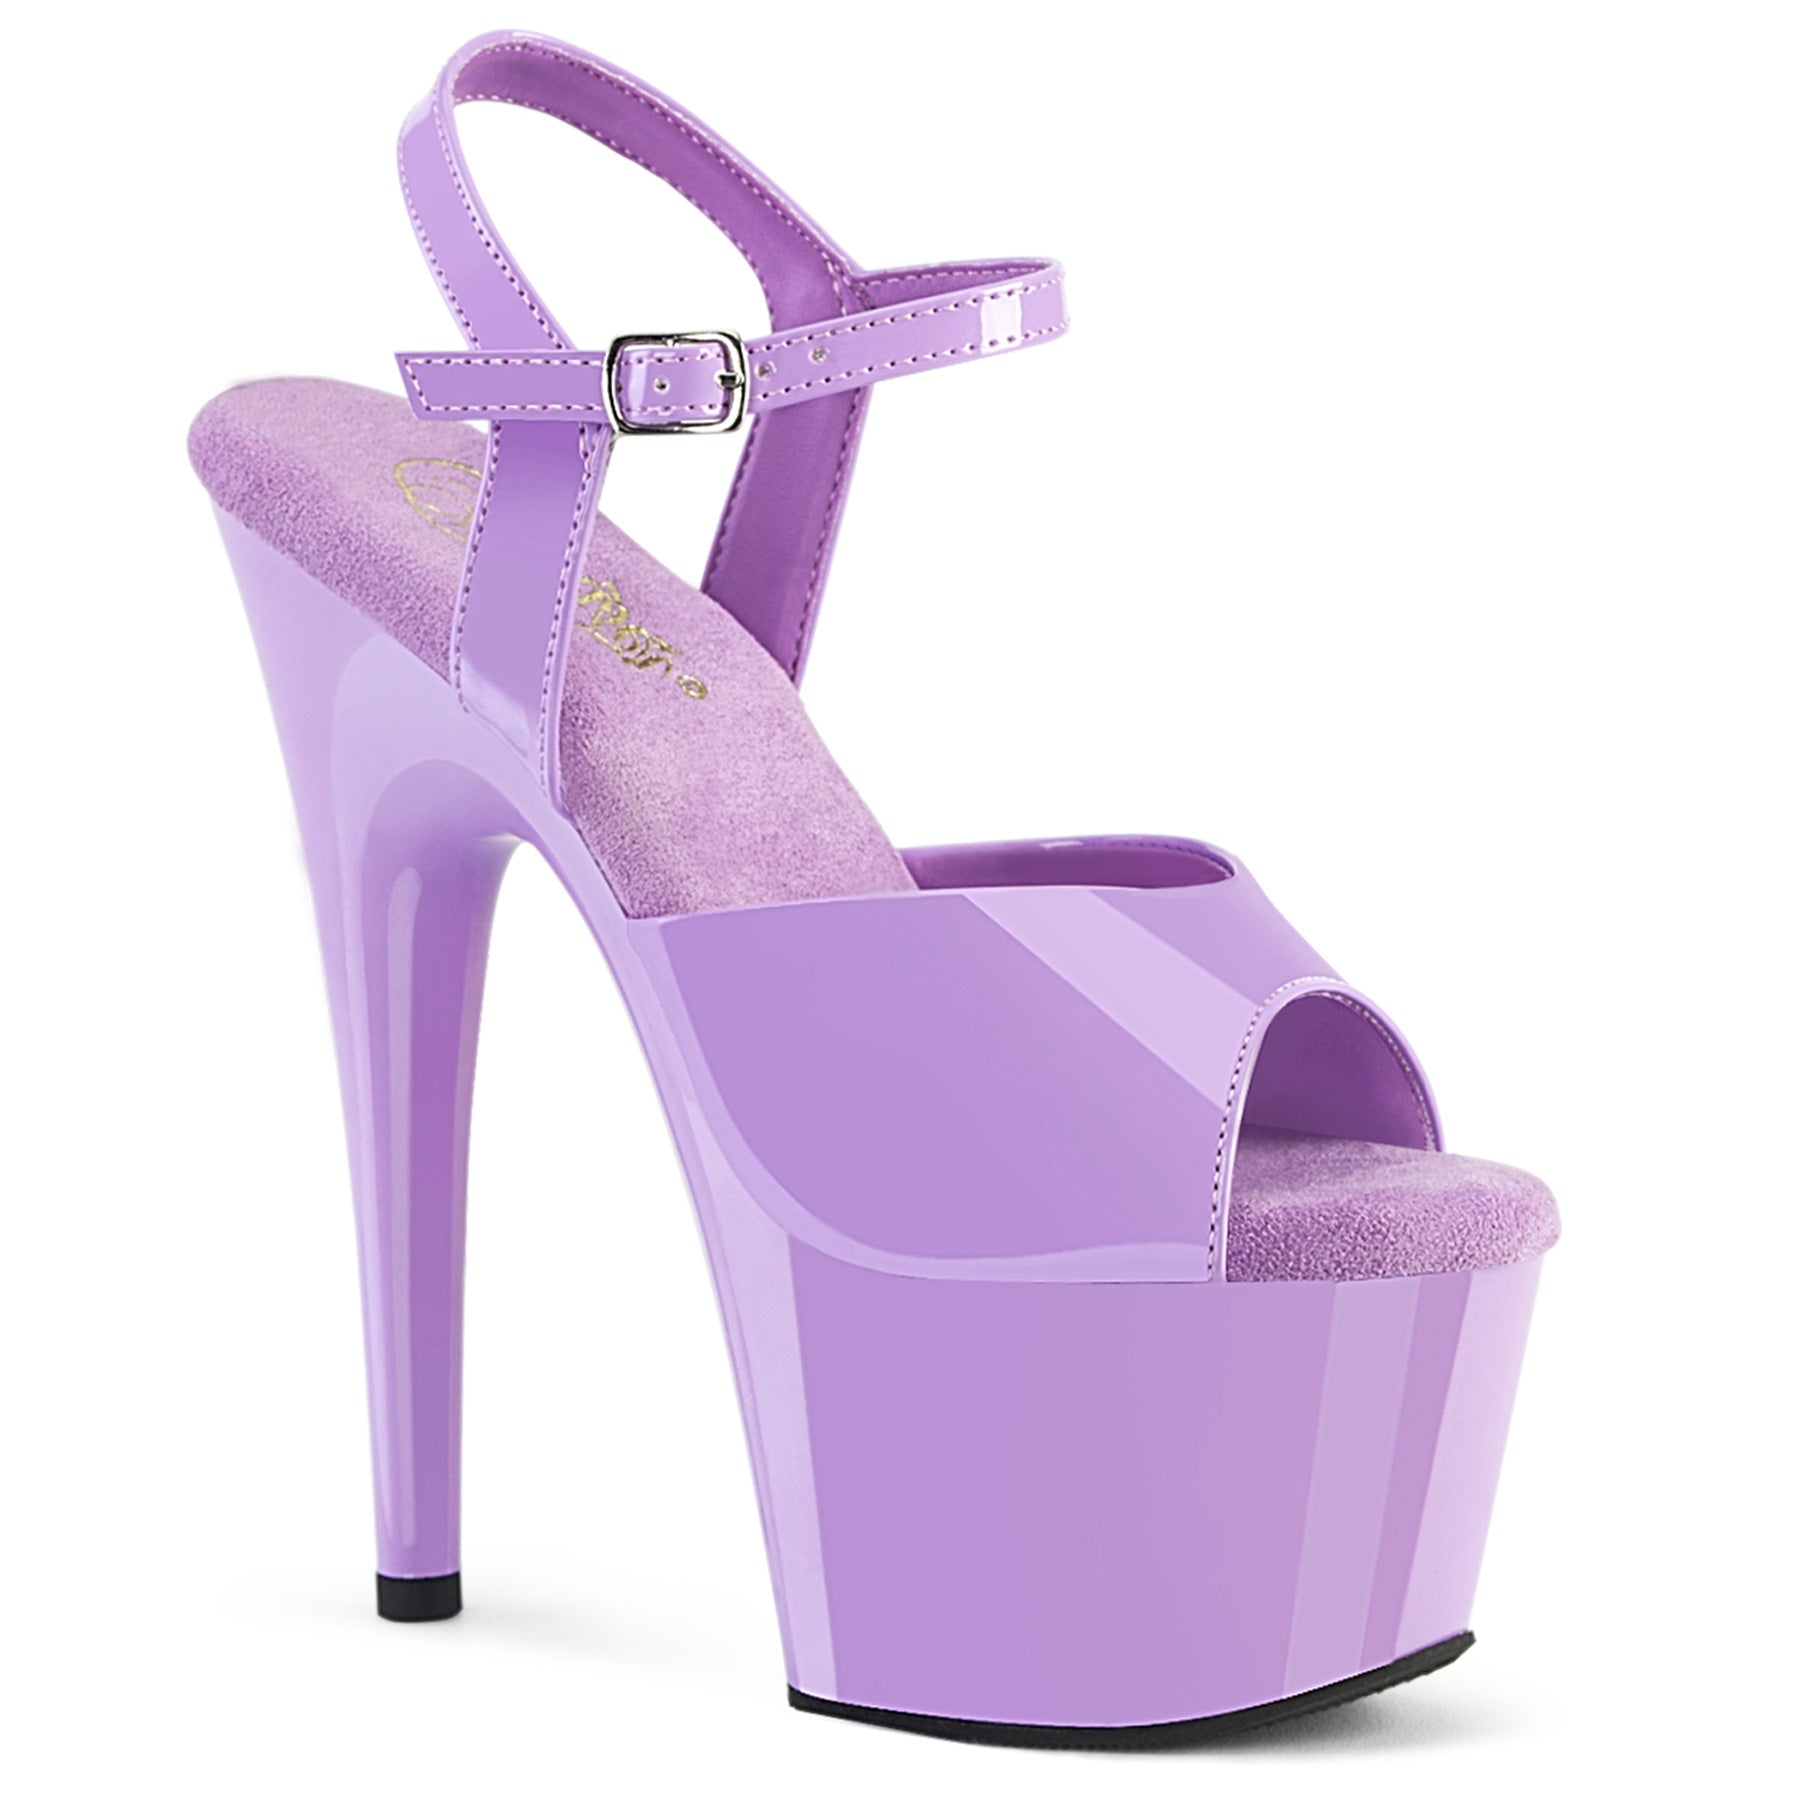 ADORE-709 7" Sandal - Lavender Patent/Lavender